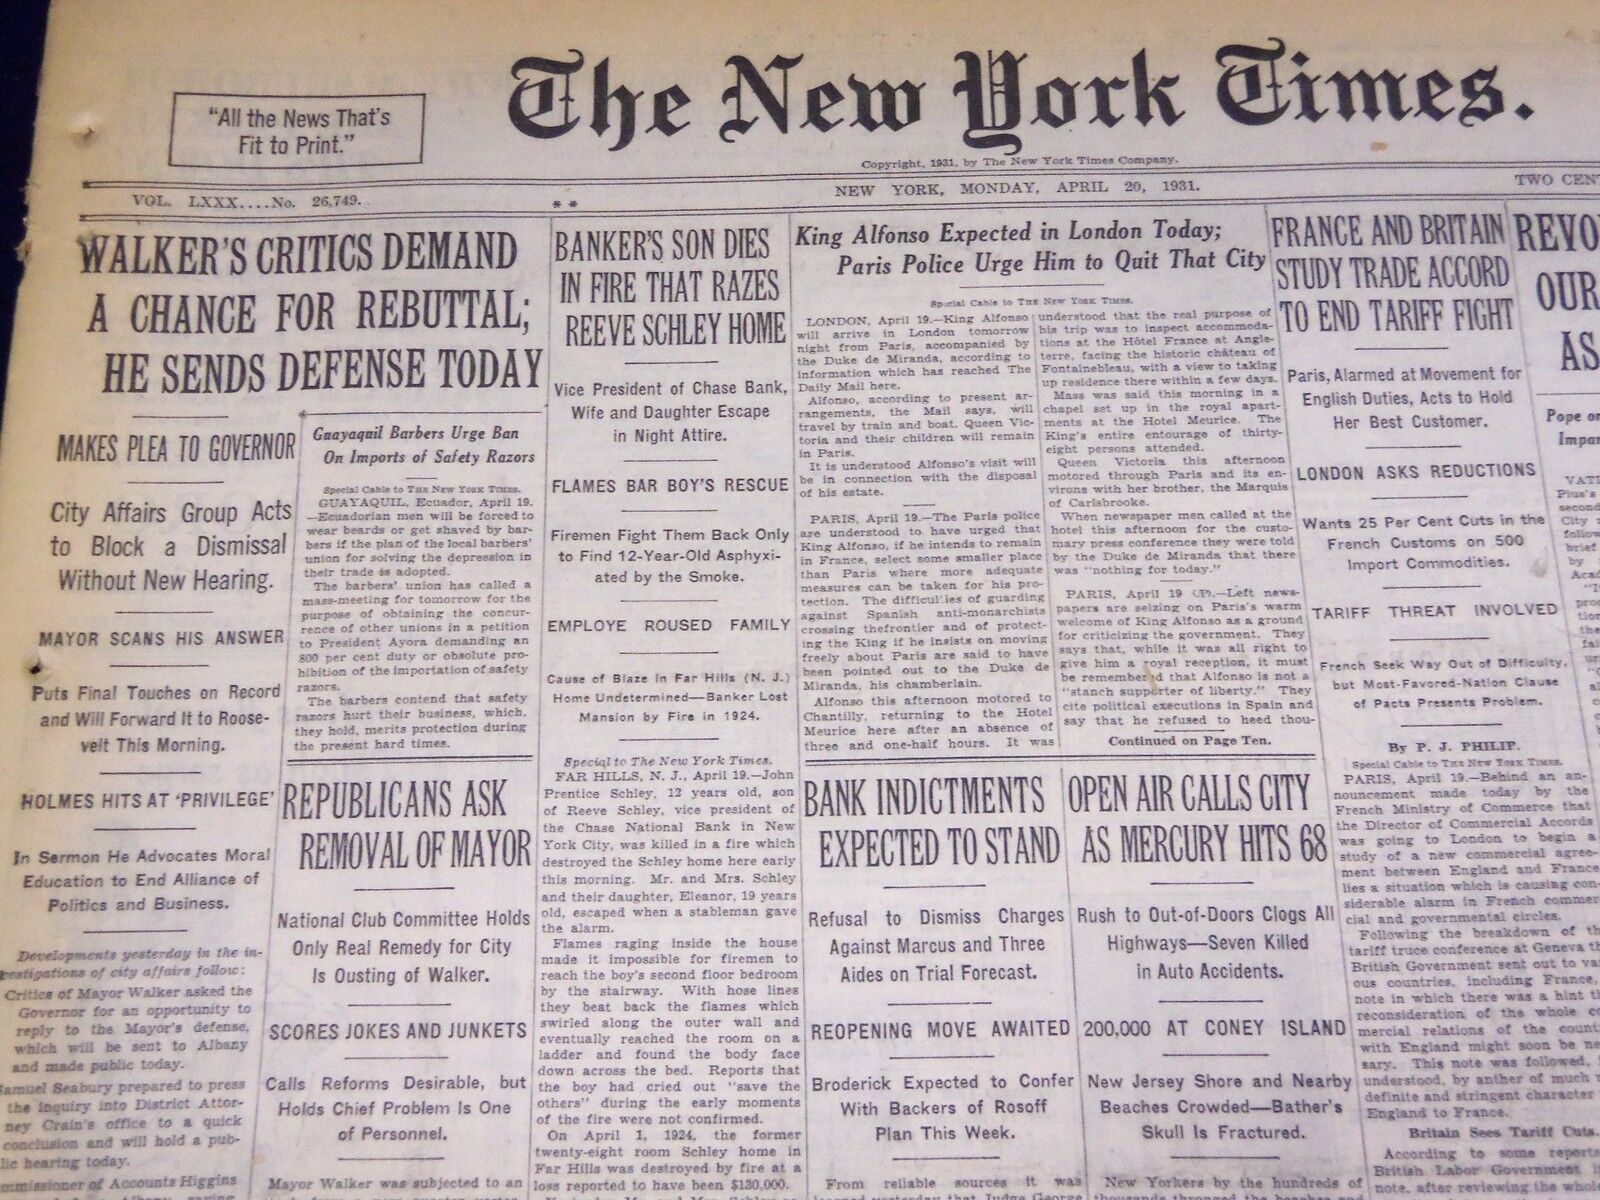 1931 APRIL 20 NEW YORK TIMES - WALKER CRITICS DEMAND REBUTTAL - NT 3938